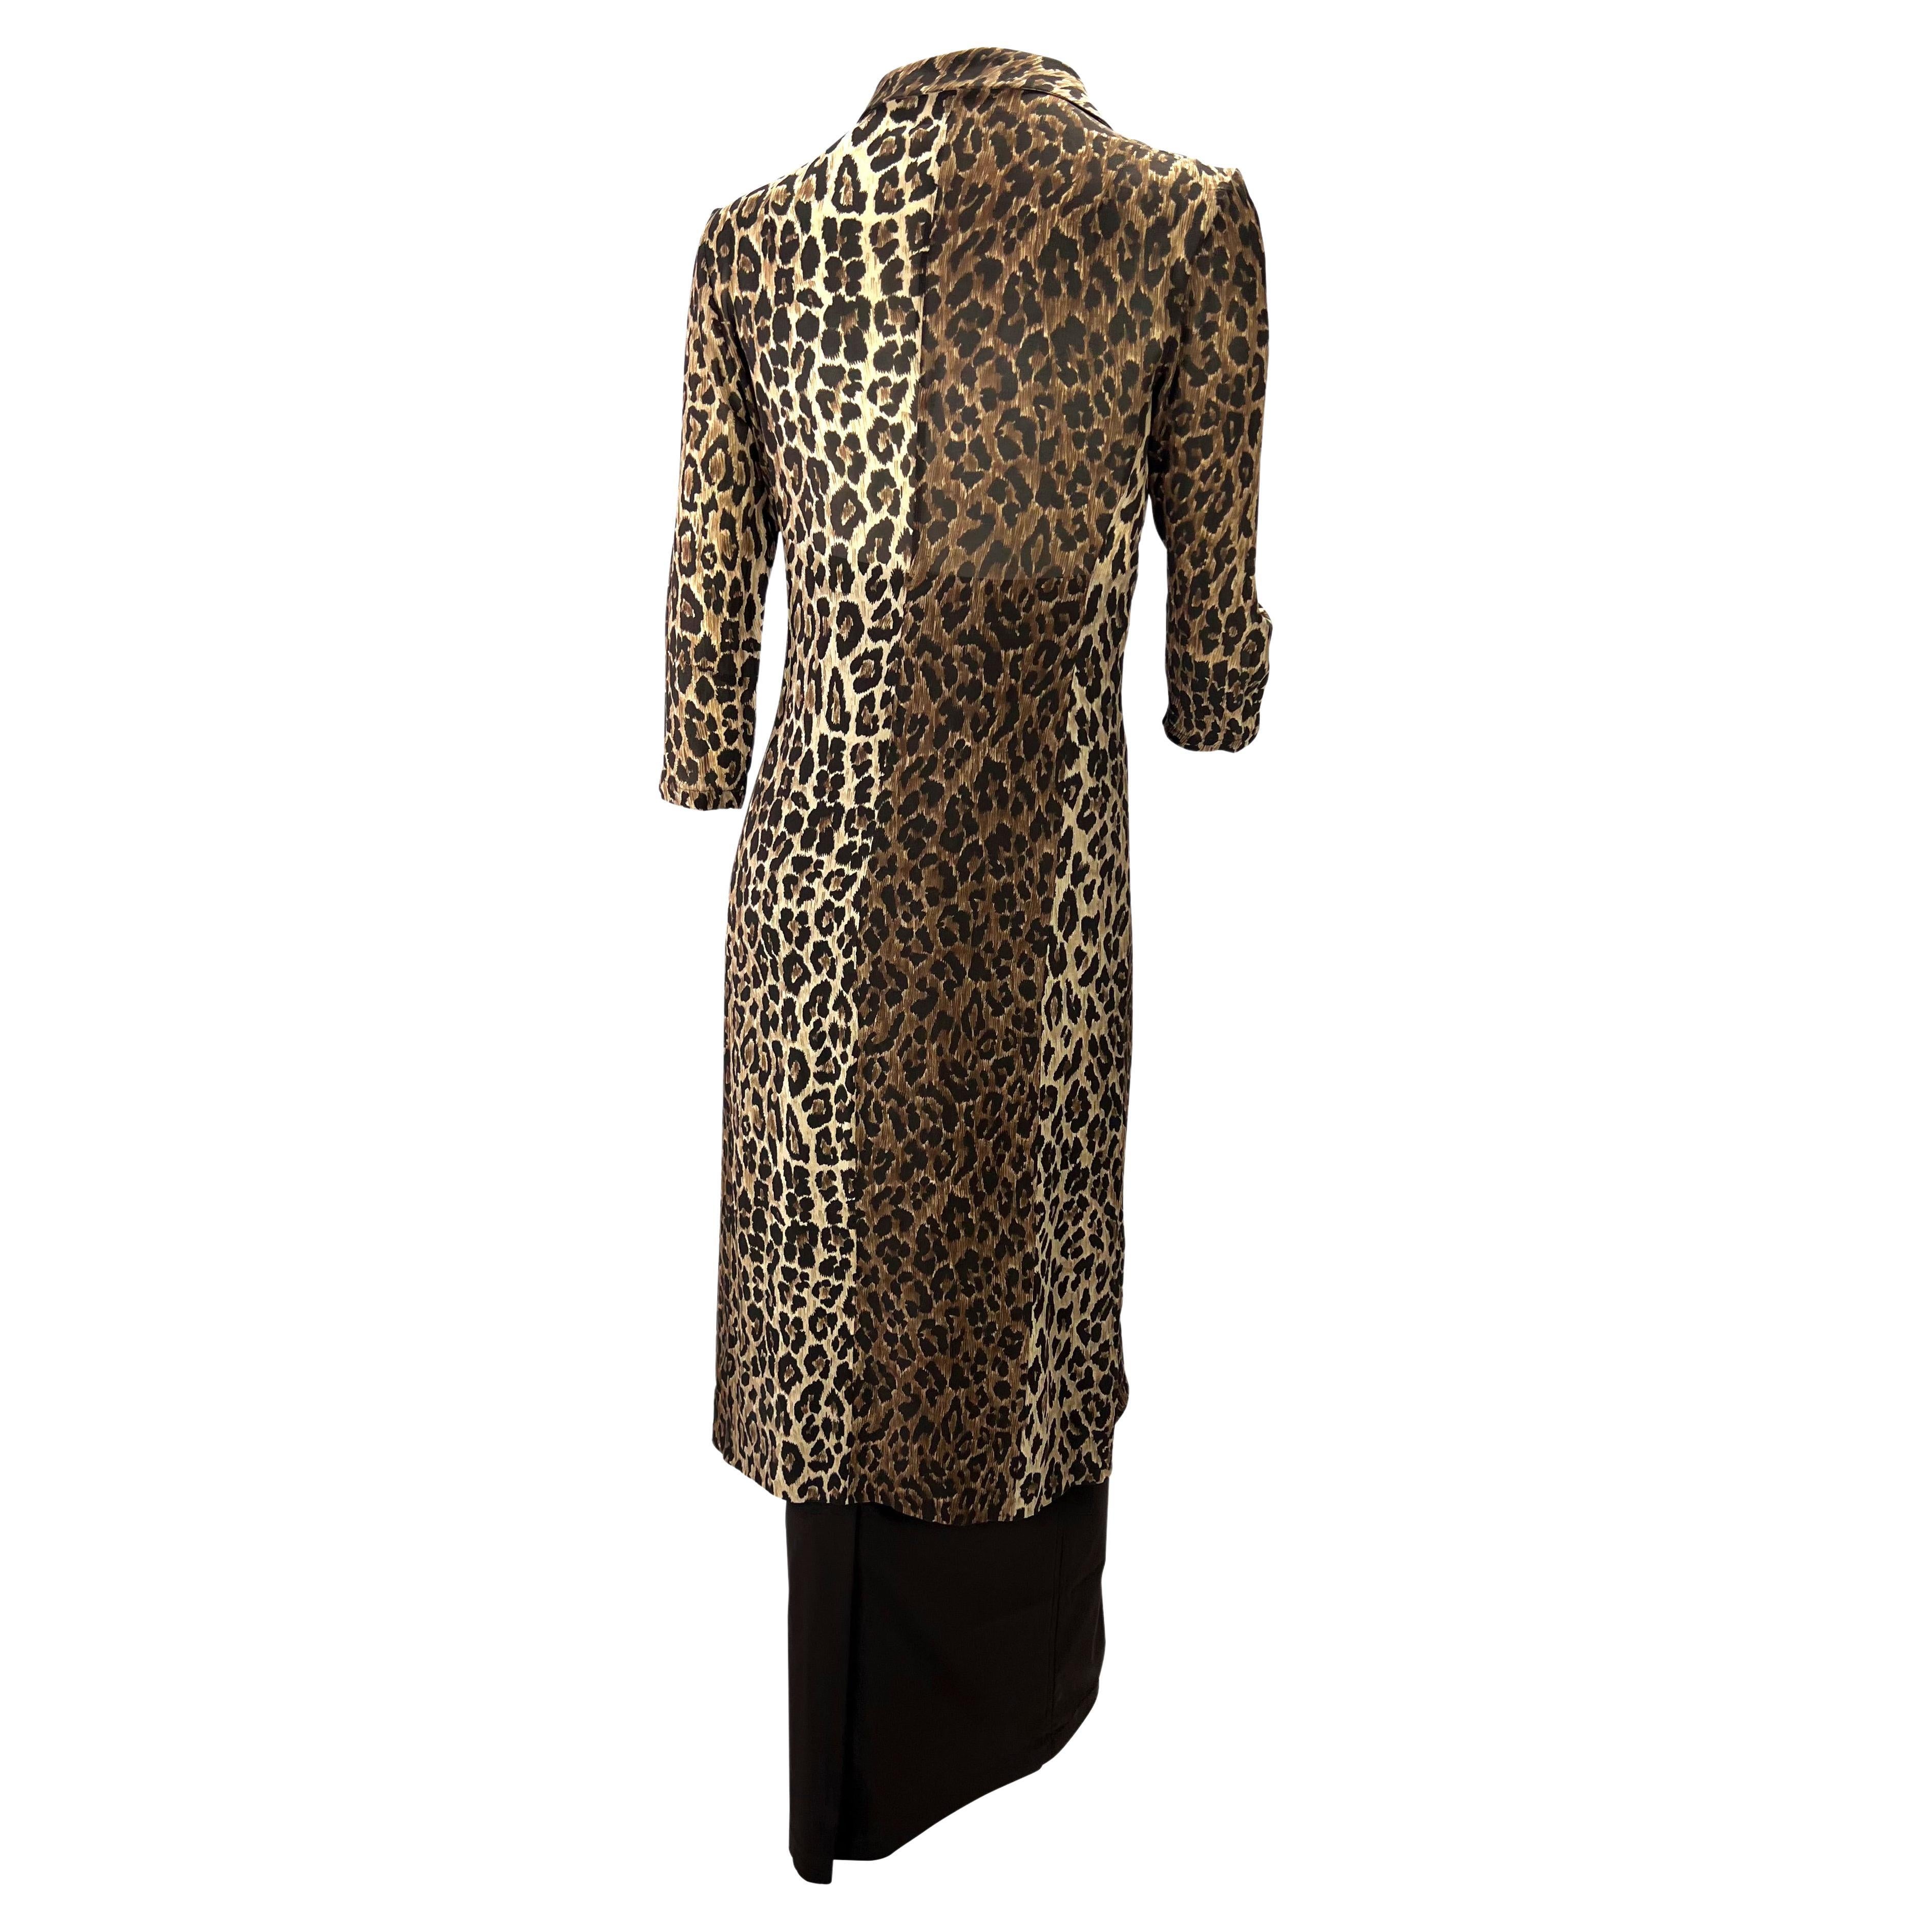 S/S 1997 Dolce & Gabbana Cheetah Print Sheer Cardigan High-Waisted Skirt Set For Sale 2